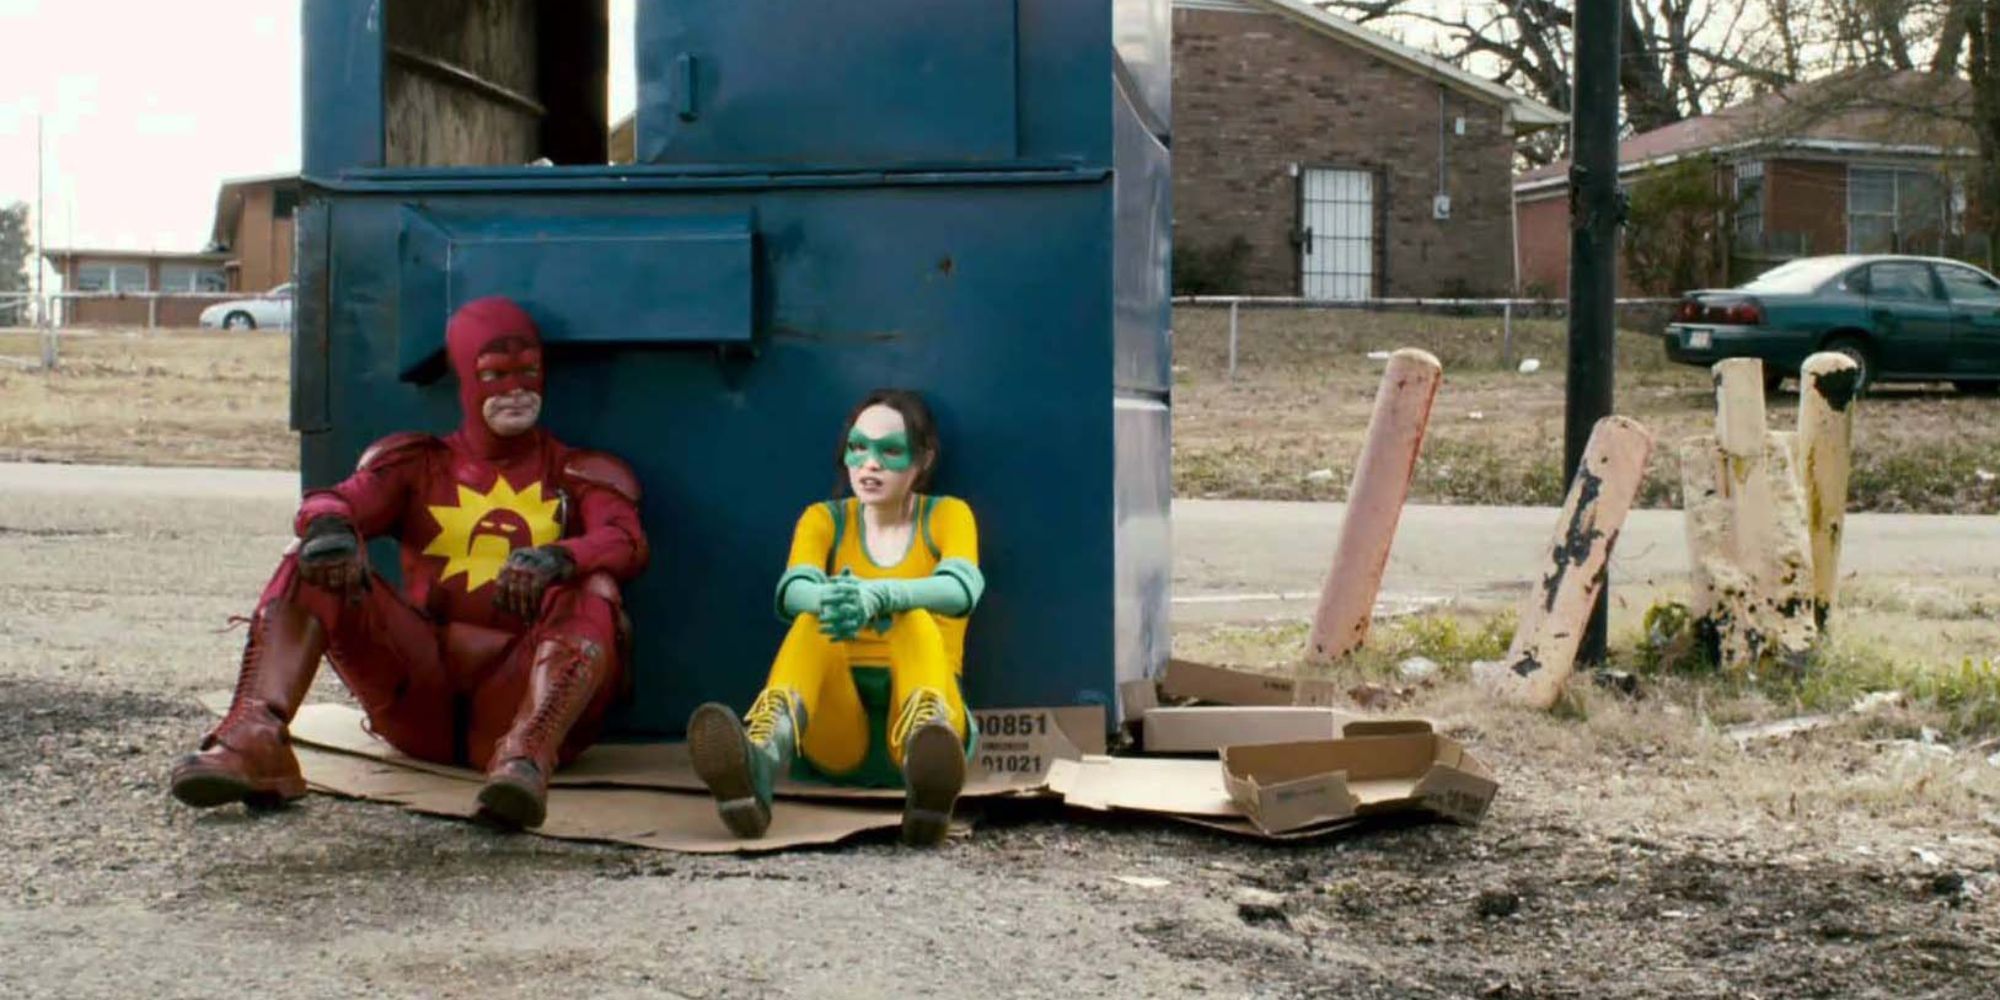 Super's Rainn Wilson and Elliot Page sitting by rubbish bin in empty suburban street